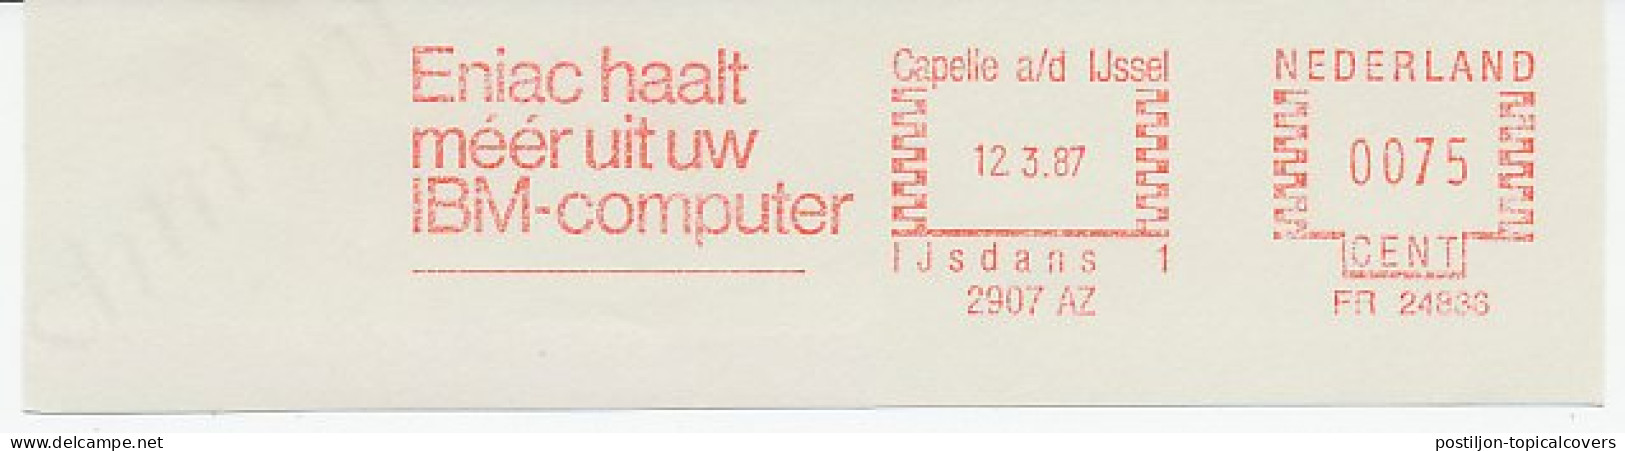 Meter Cut Netherlands 1987 Computer - IBM - Eniac - Informatik